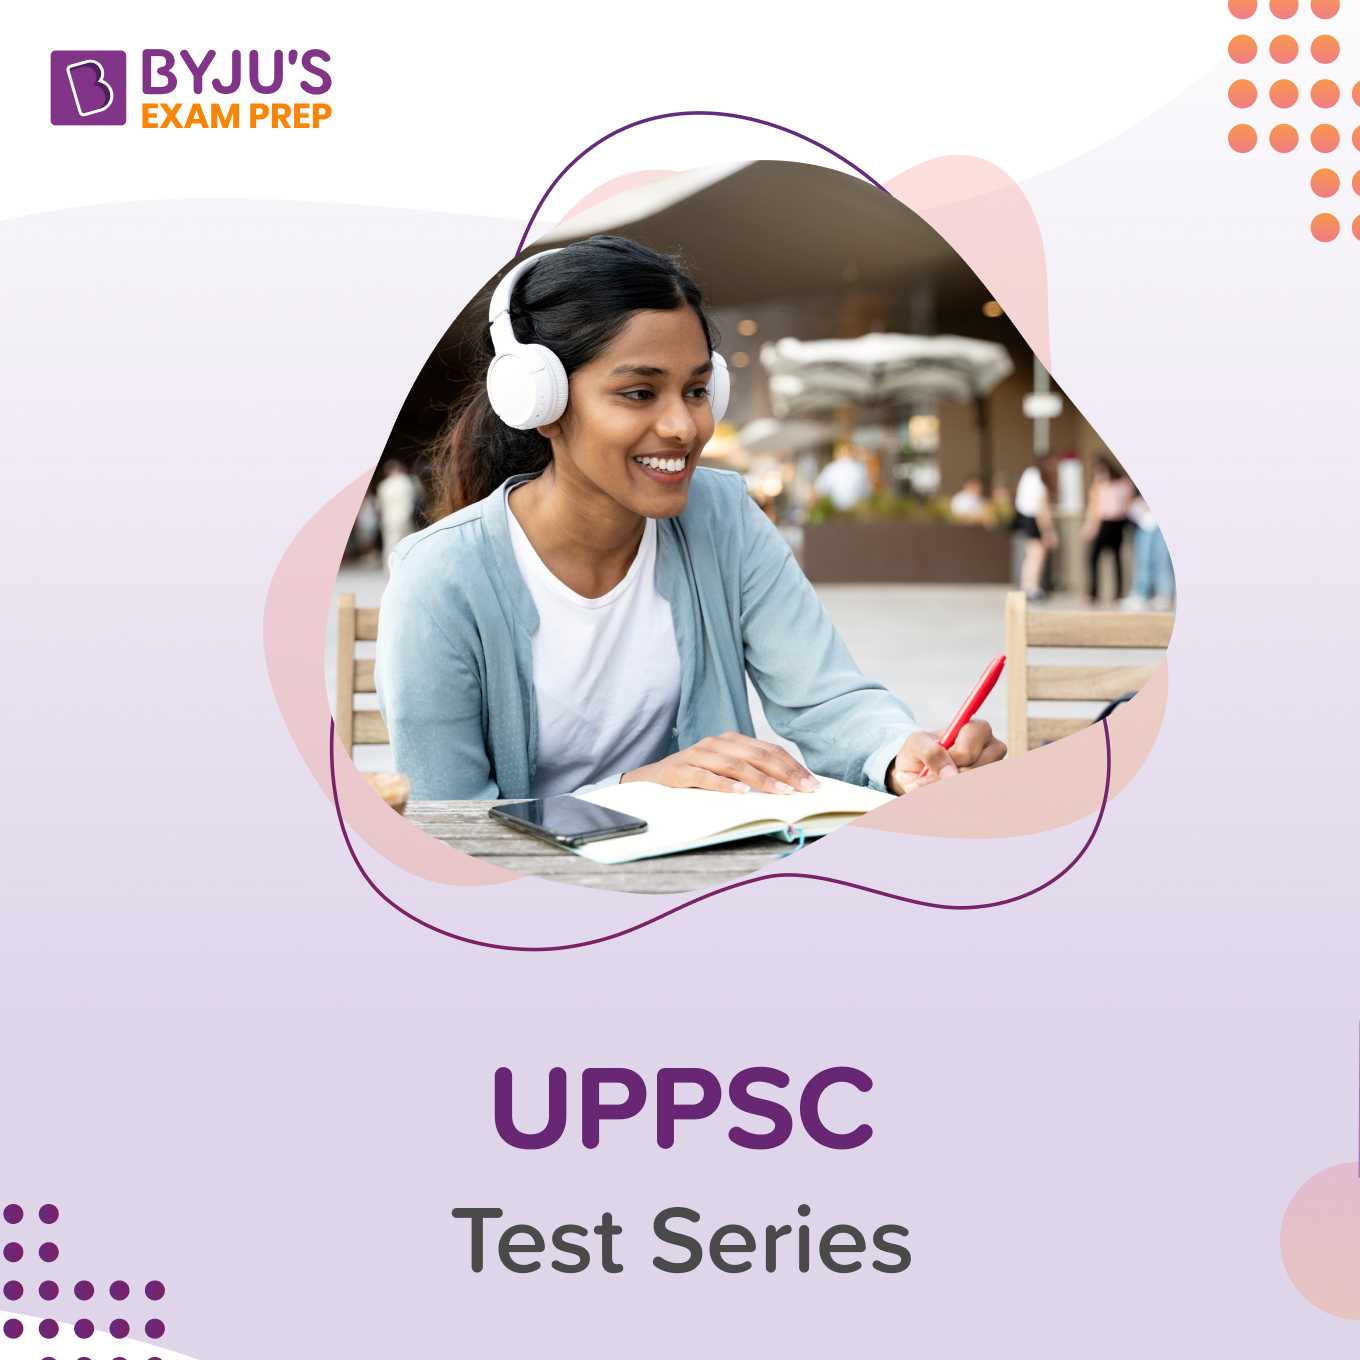 UPPSC - Test Series